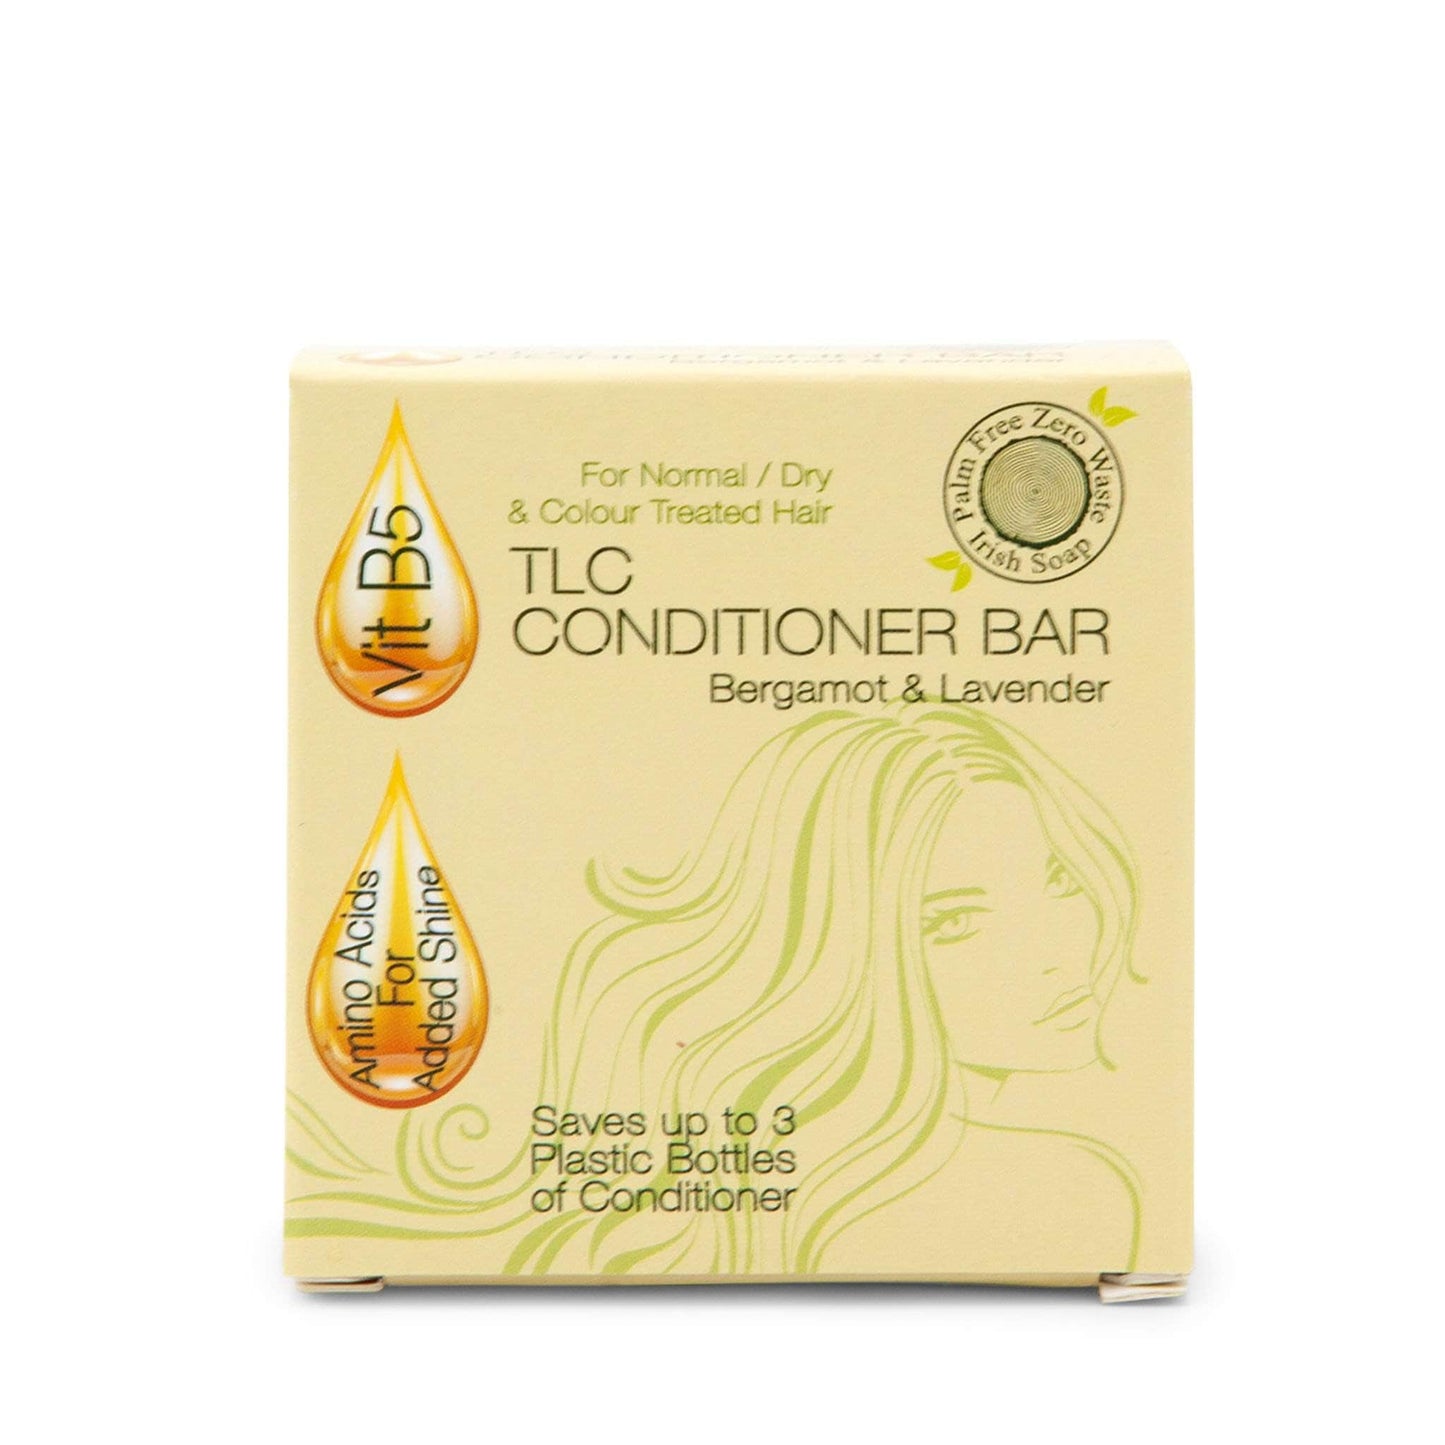 Palm Free Irish Soap Conditioner Silky Soft TLC Conditioner Bar - Bergamot & Lavender